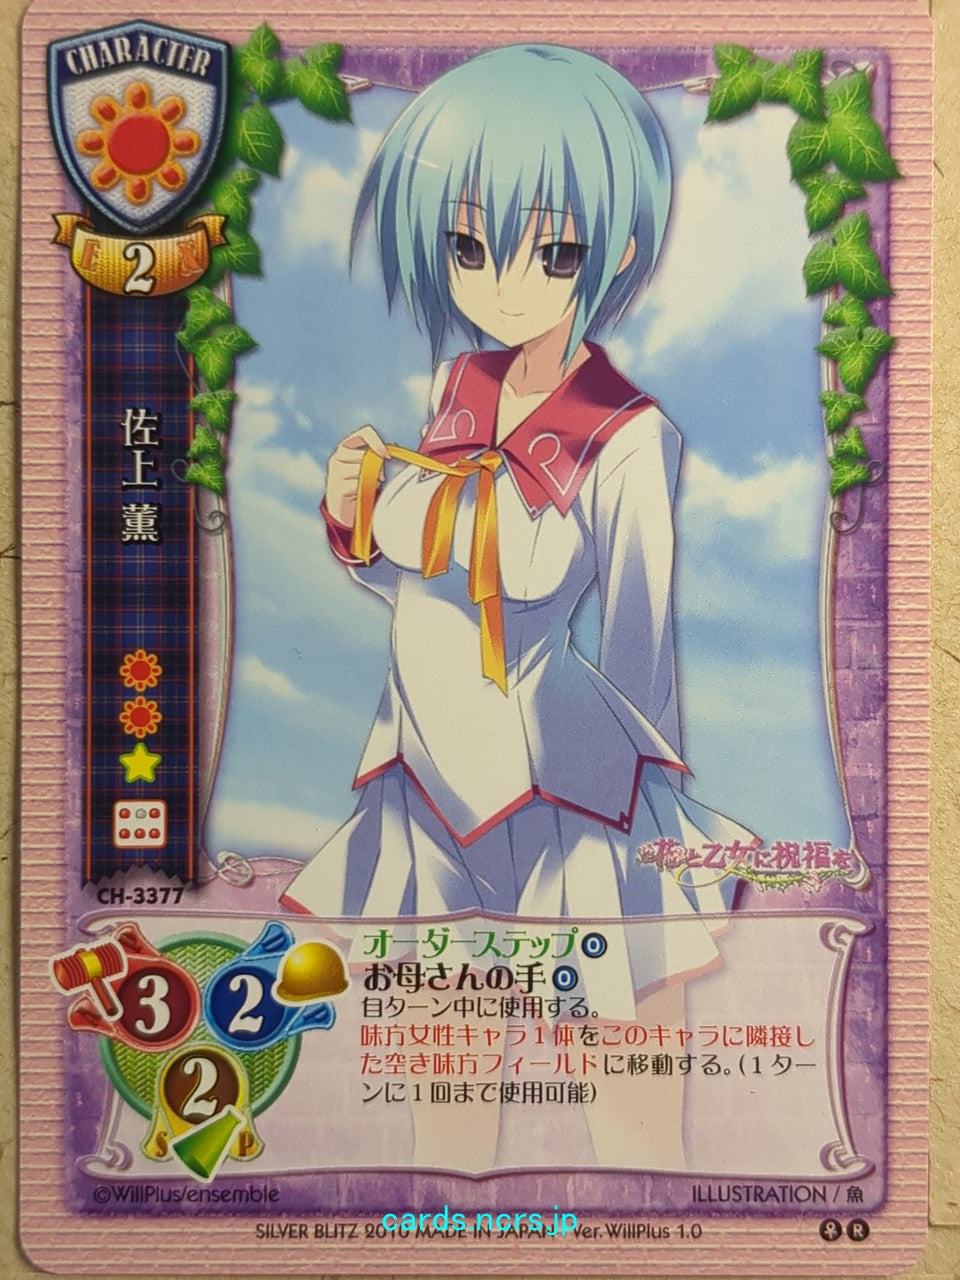 Lycee Hana to Otome ni Shukufuku wo -Kaoru Sagami-   Trading Card LY/CH-3377